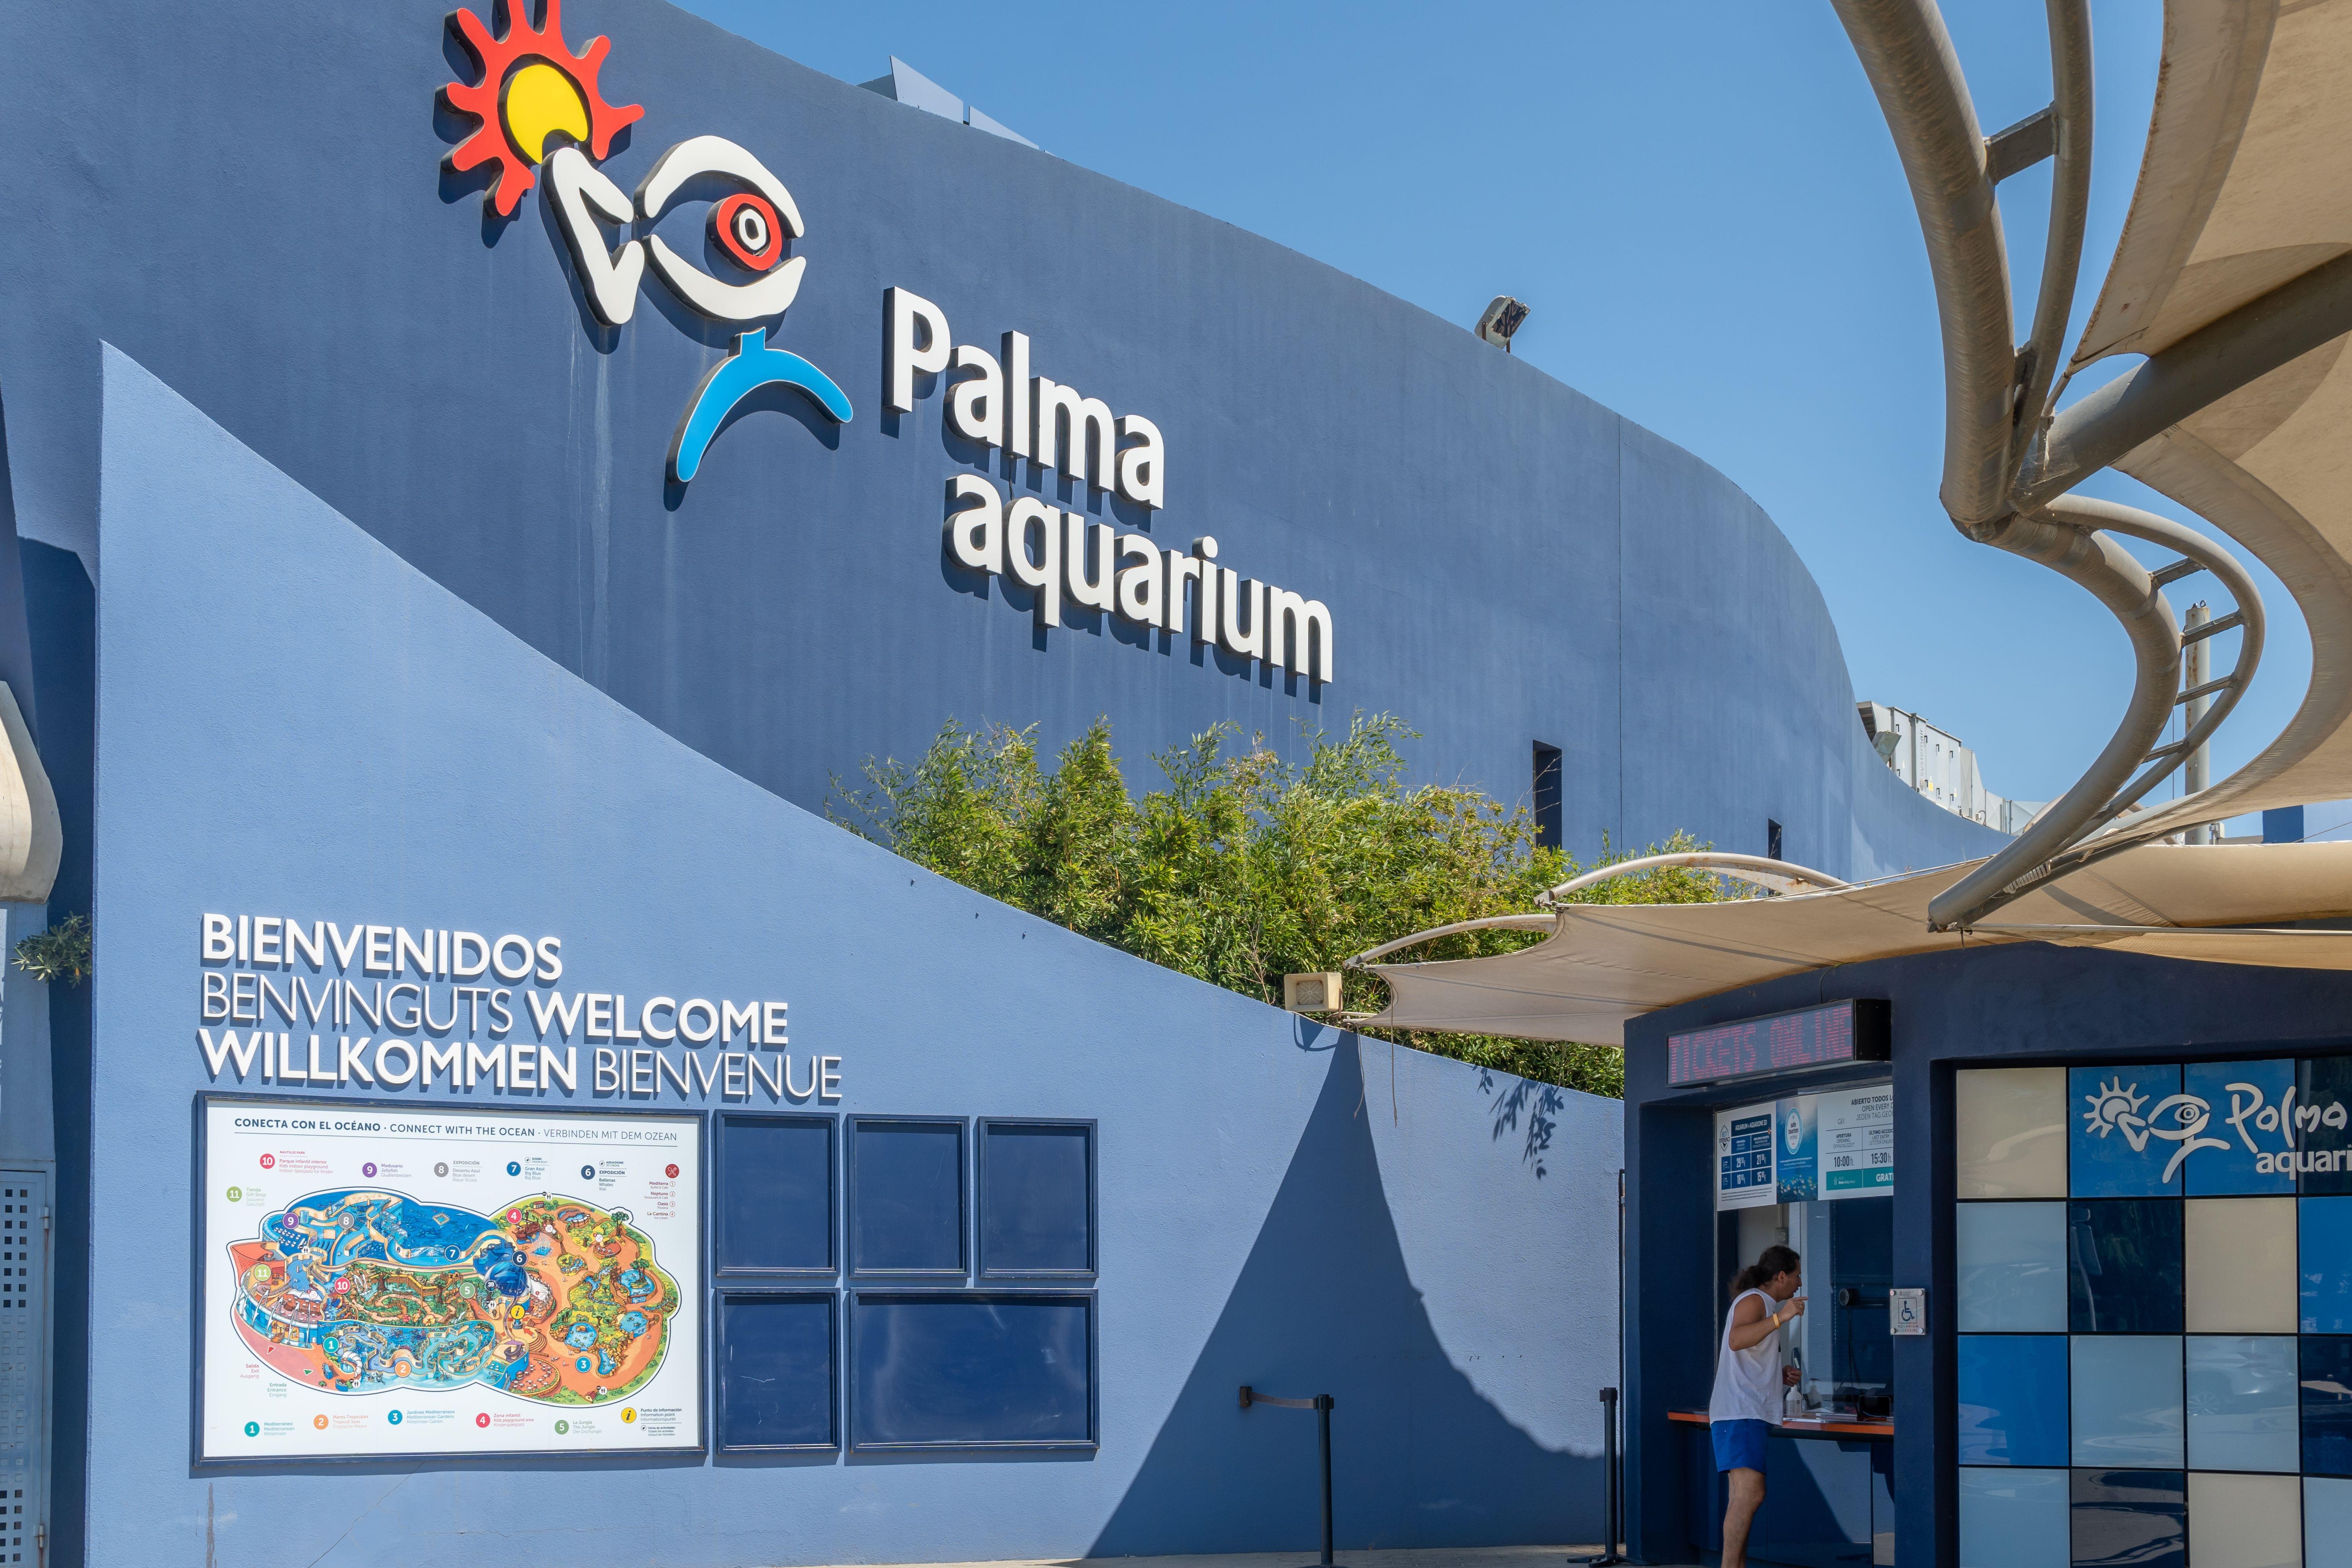 Palma Aquarium Tickets